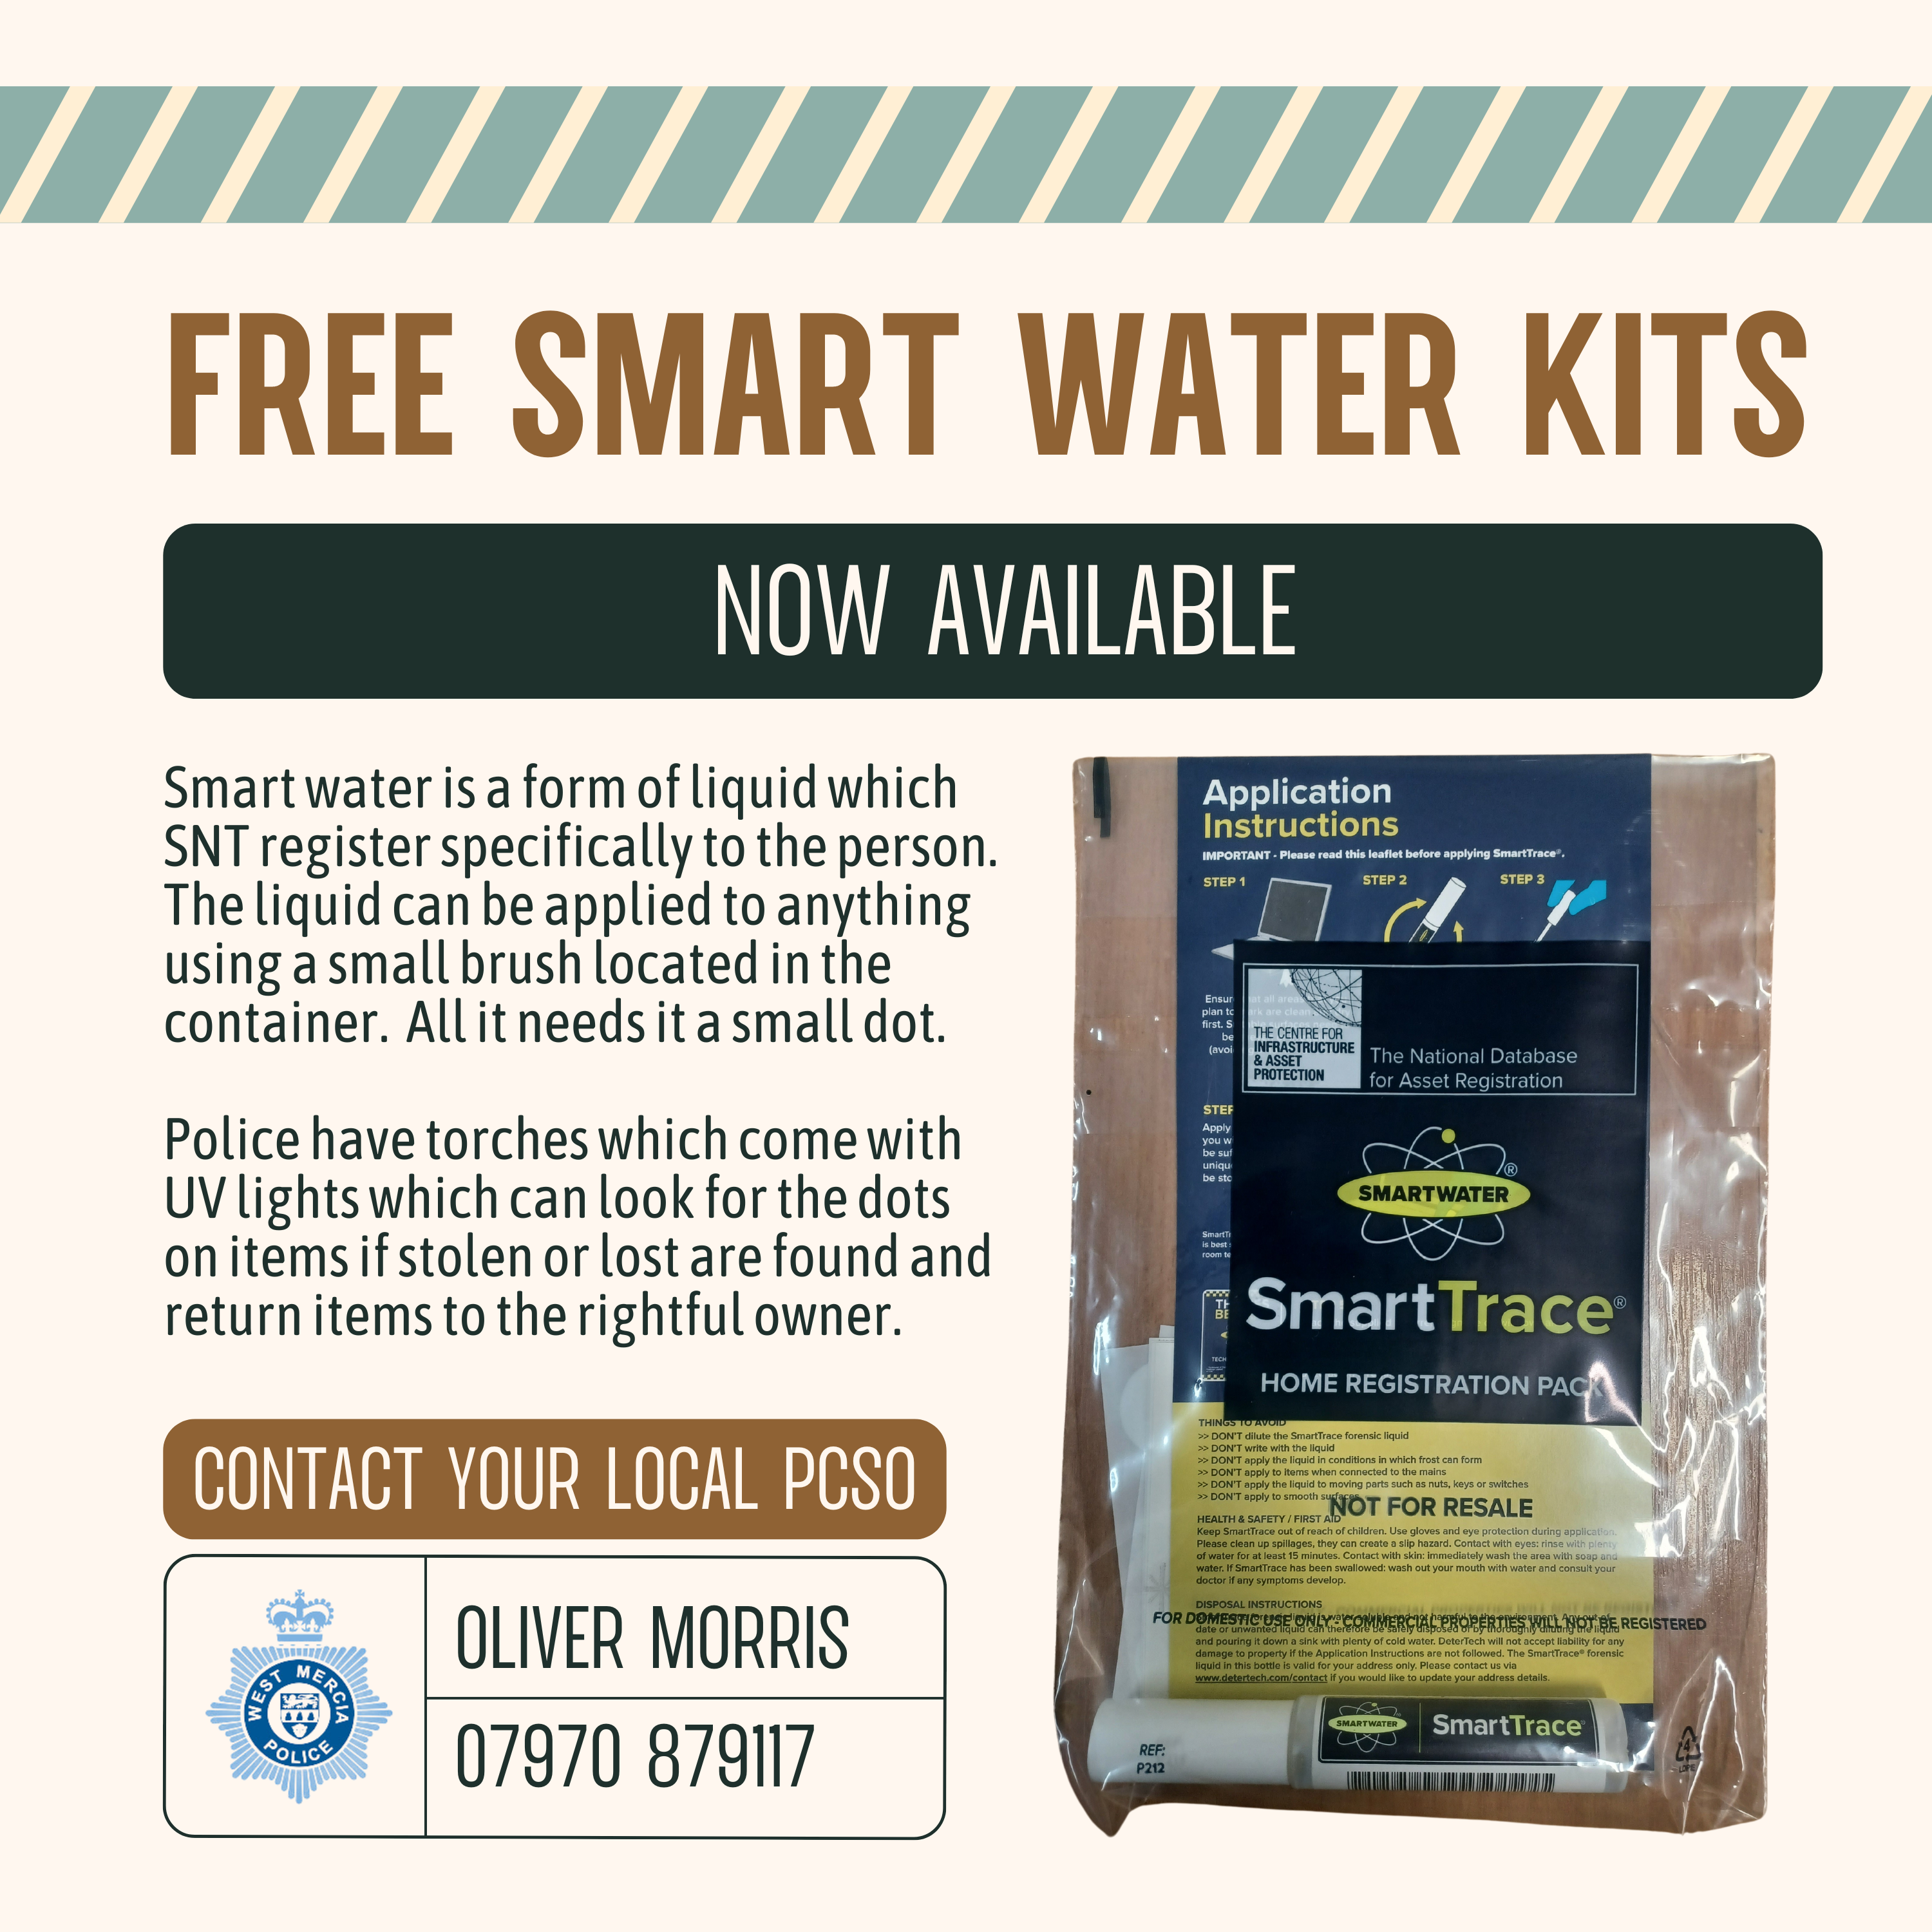 Free Smart Water Kits Availalbe